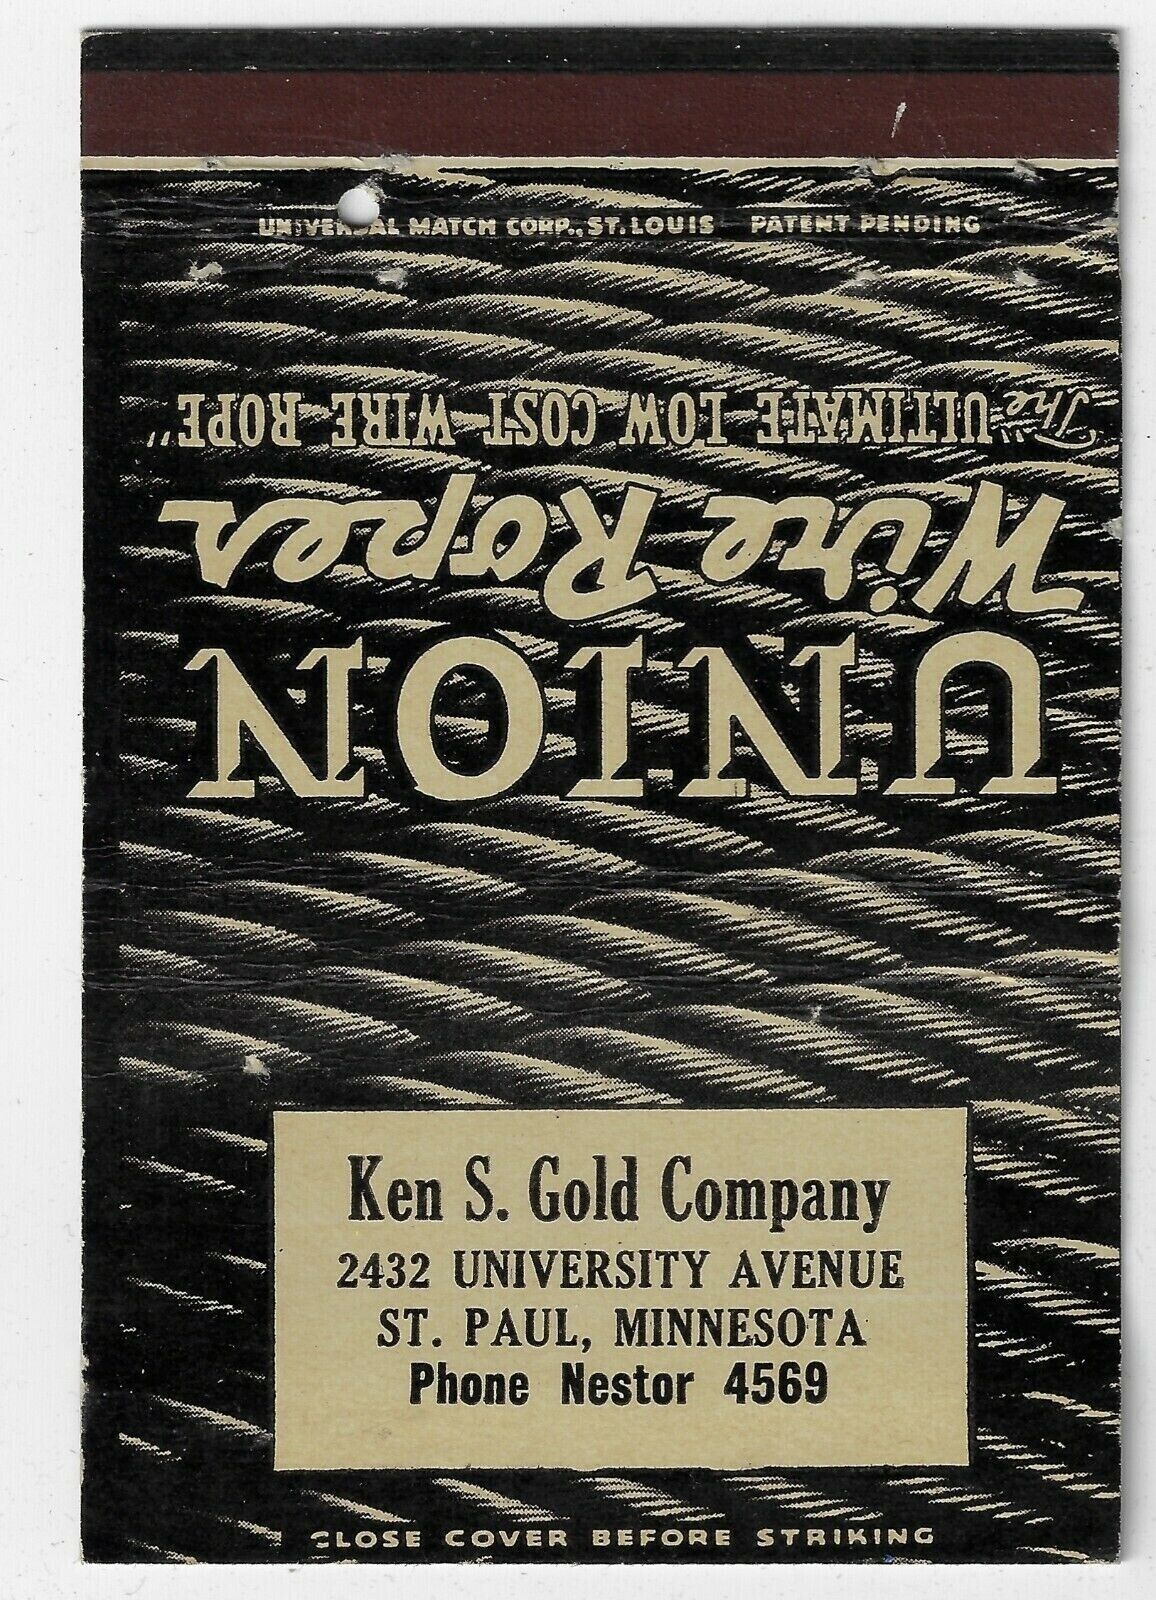 Union Wire Ropes Ken S. Gold CO St Paul MINN. FS 40S Empty Matchcover